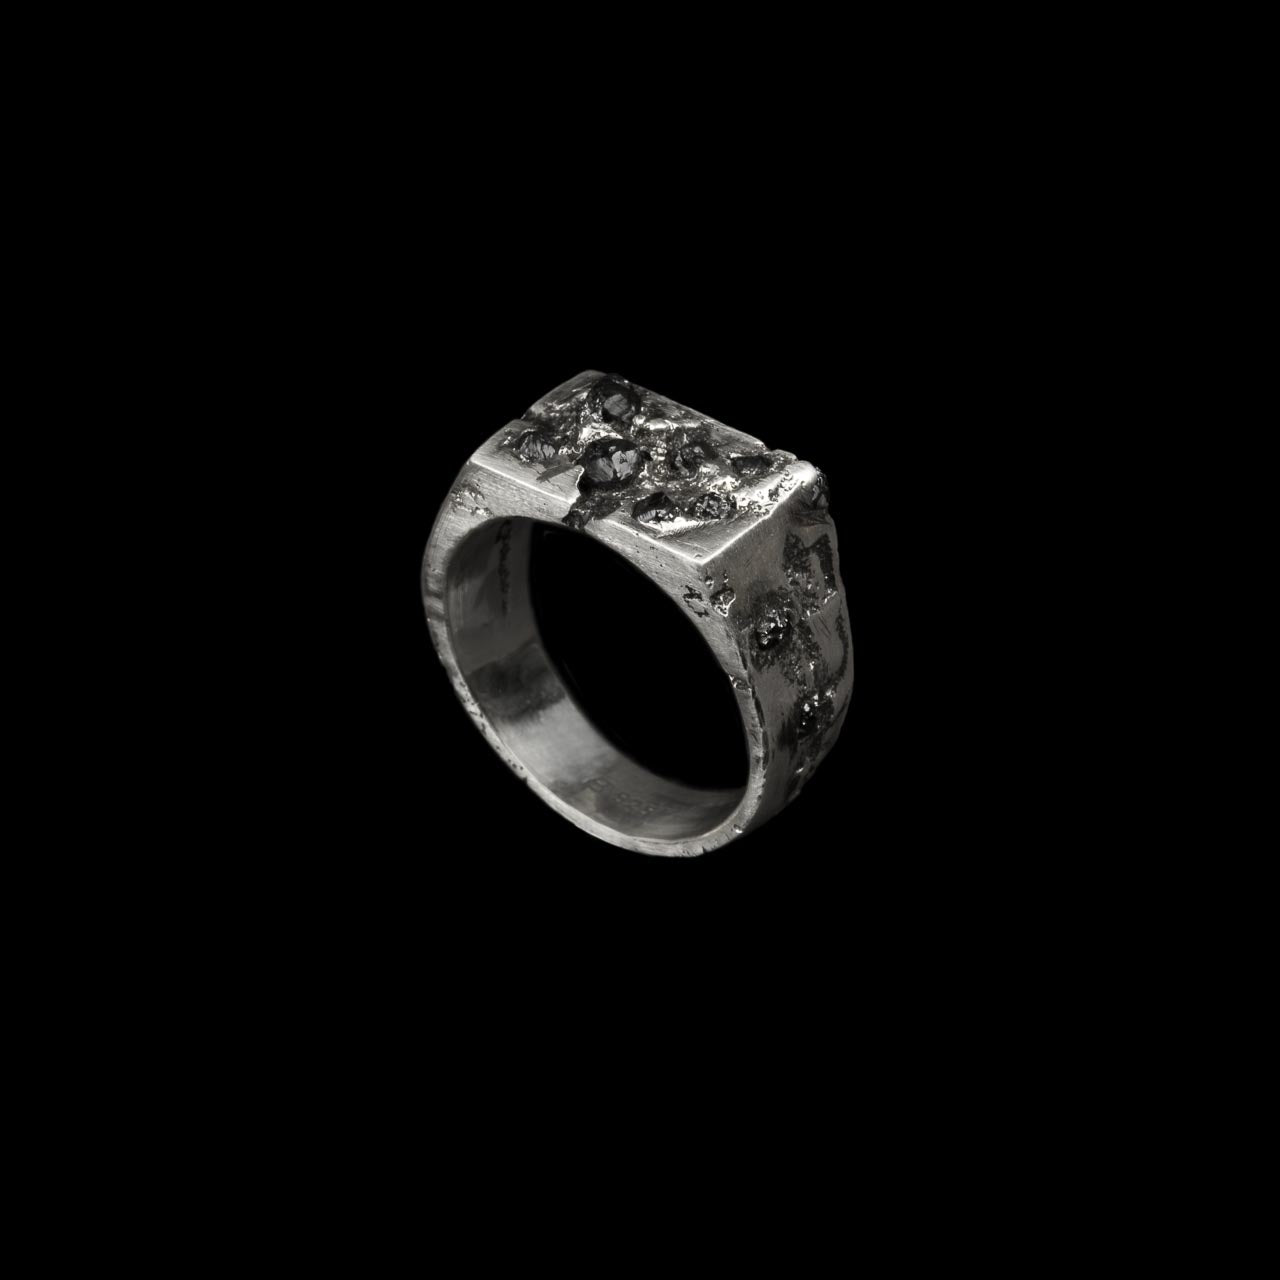 bespoke signet ring in silver with thirteen black diamonds